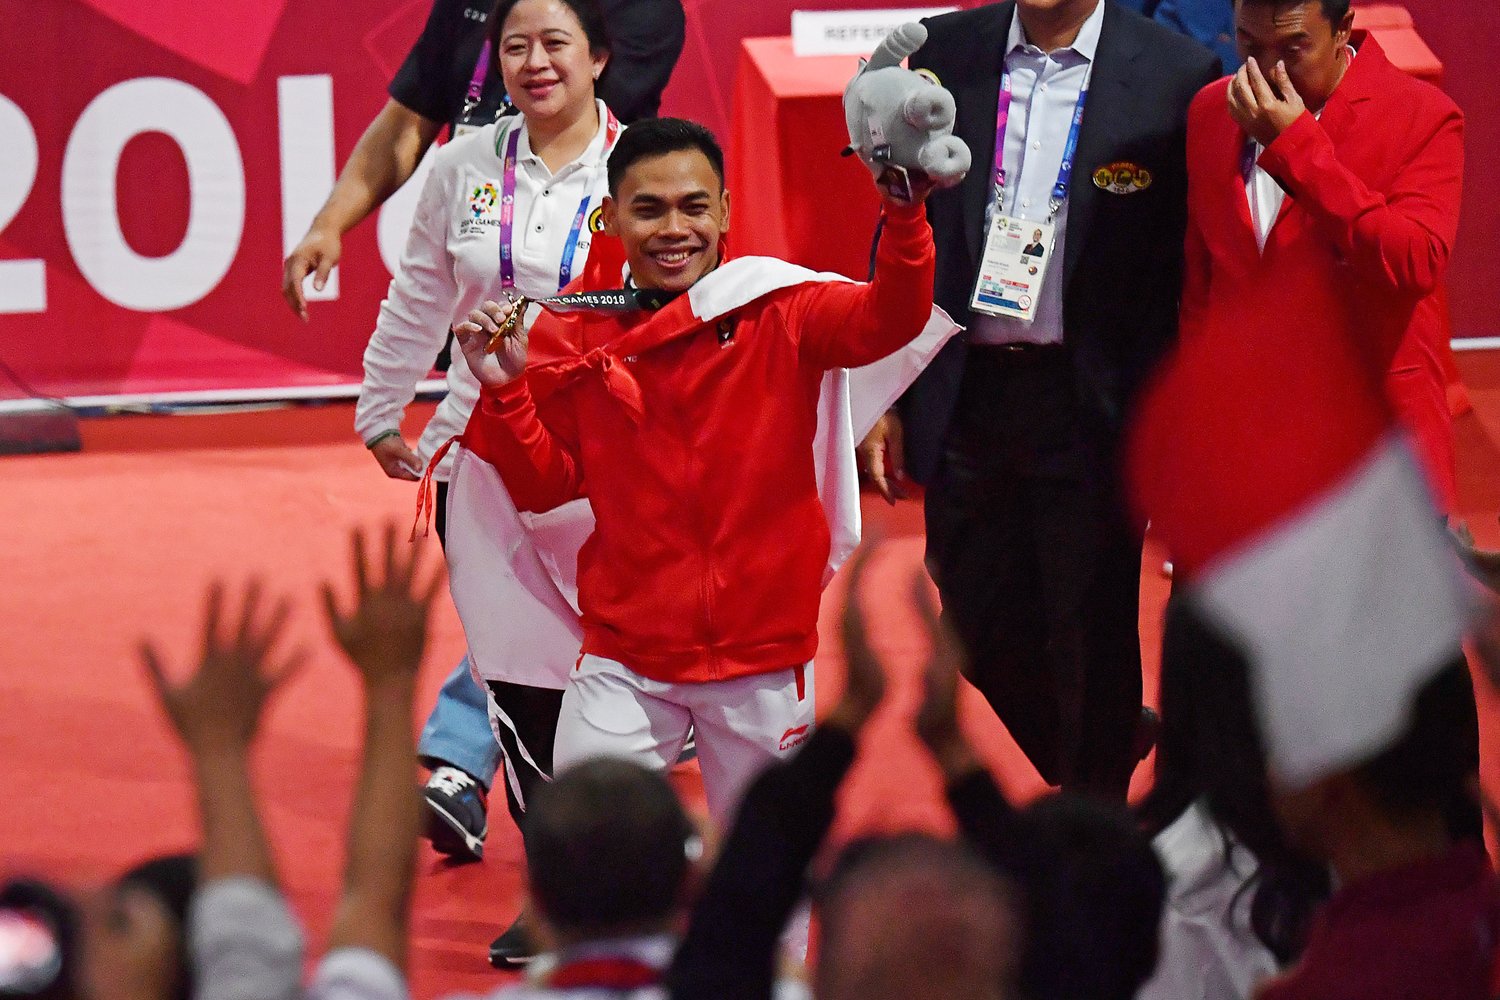 Menko PMK Puan Maharani (kiri) dan Menpora Imam Nahrawi (kanan) mendampingi lifter Indonesia Eko Yuli Irawan menyapa penonton usai nomor angkat besi putra 62 kg Group A Asian Games ke-18 2018 di JiExpo Jakarta, Senin (20/8). Eko berhasil meraih emas pada nomor tersebut. 